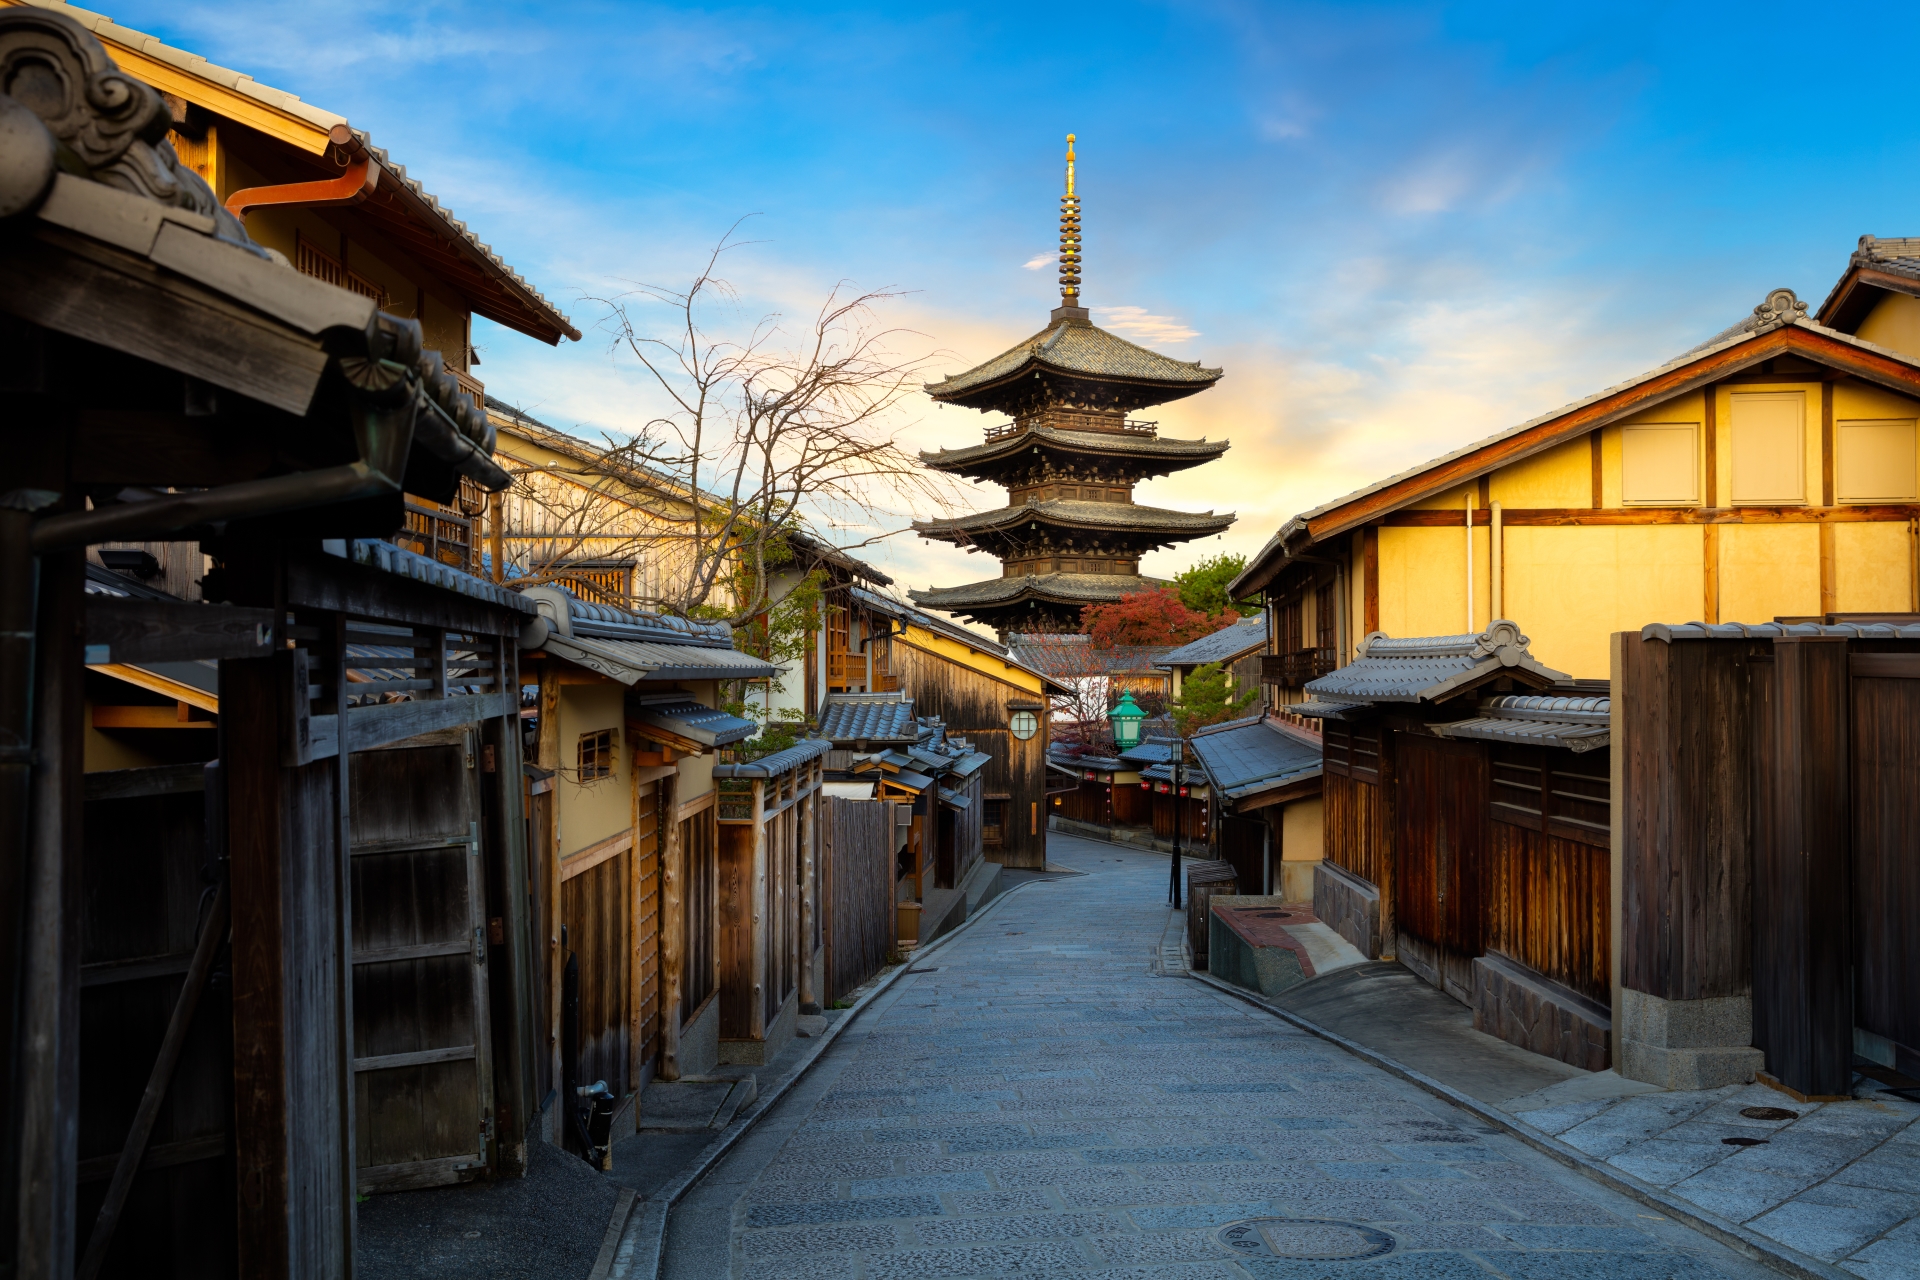 Backstreets of Kyoto